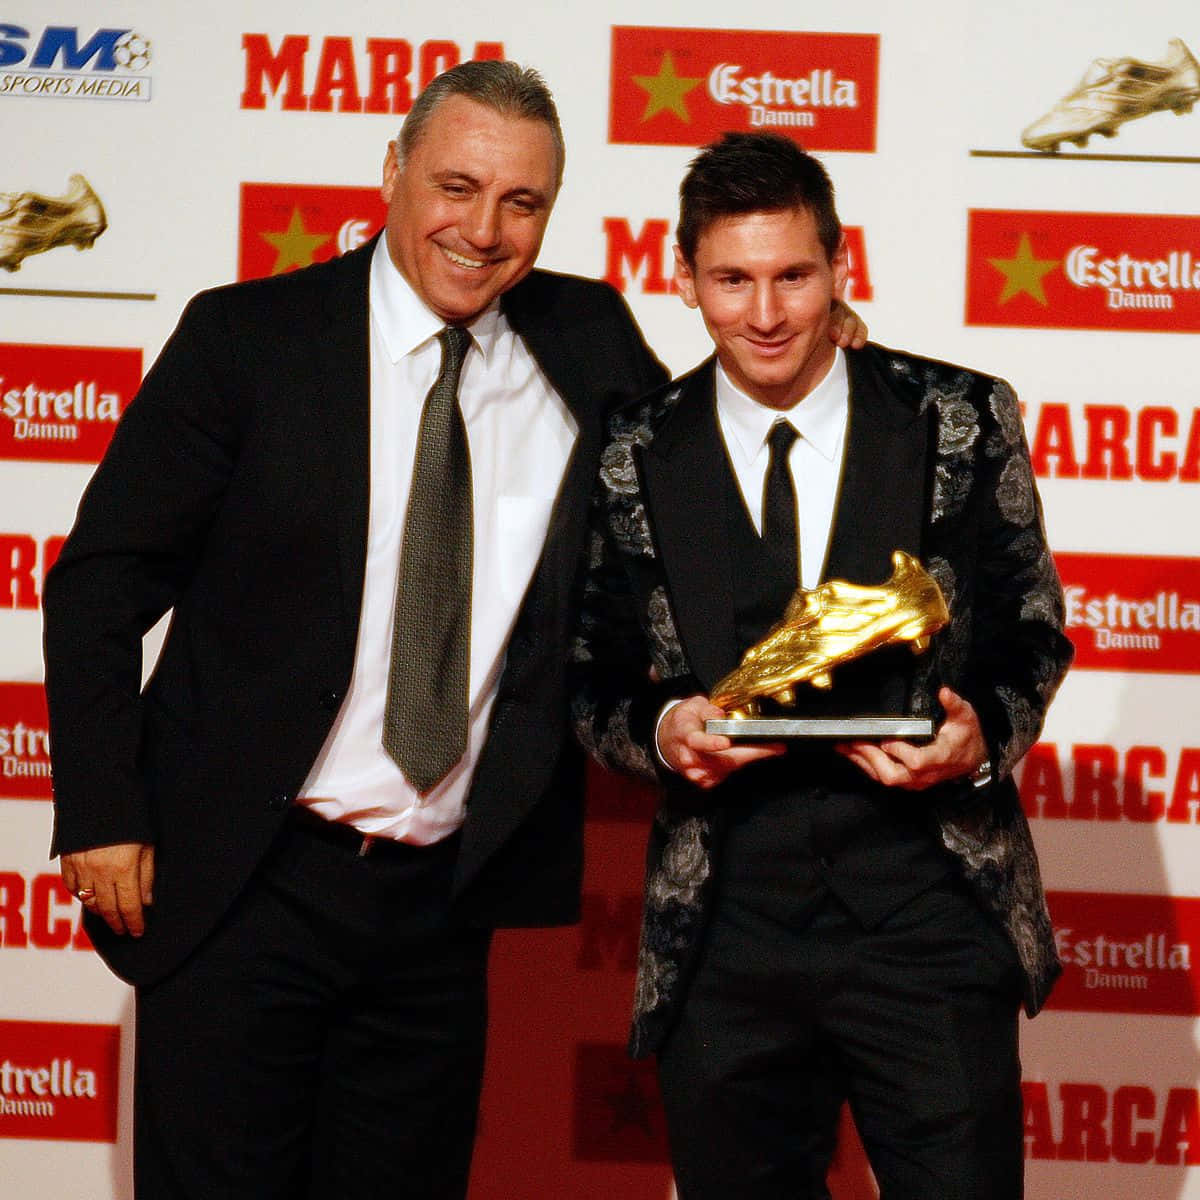 Hristo Stoichkov og Lionel Messi scorer altid! Wallpaper